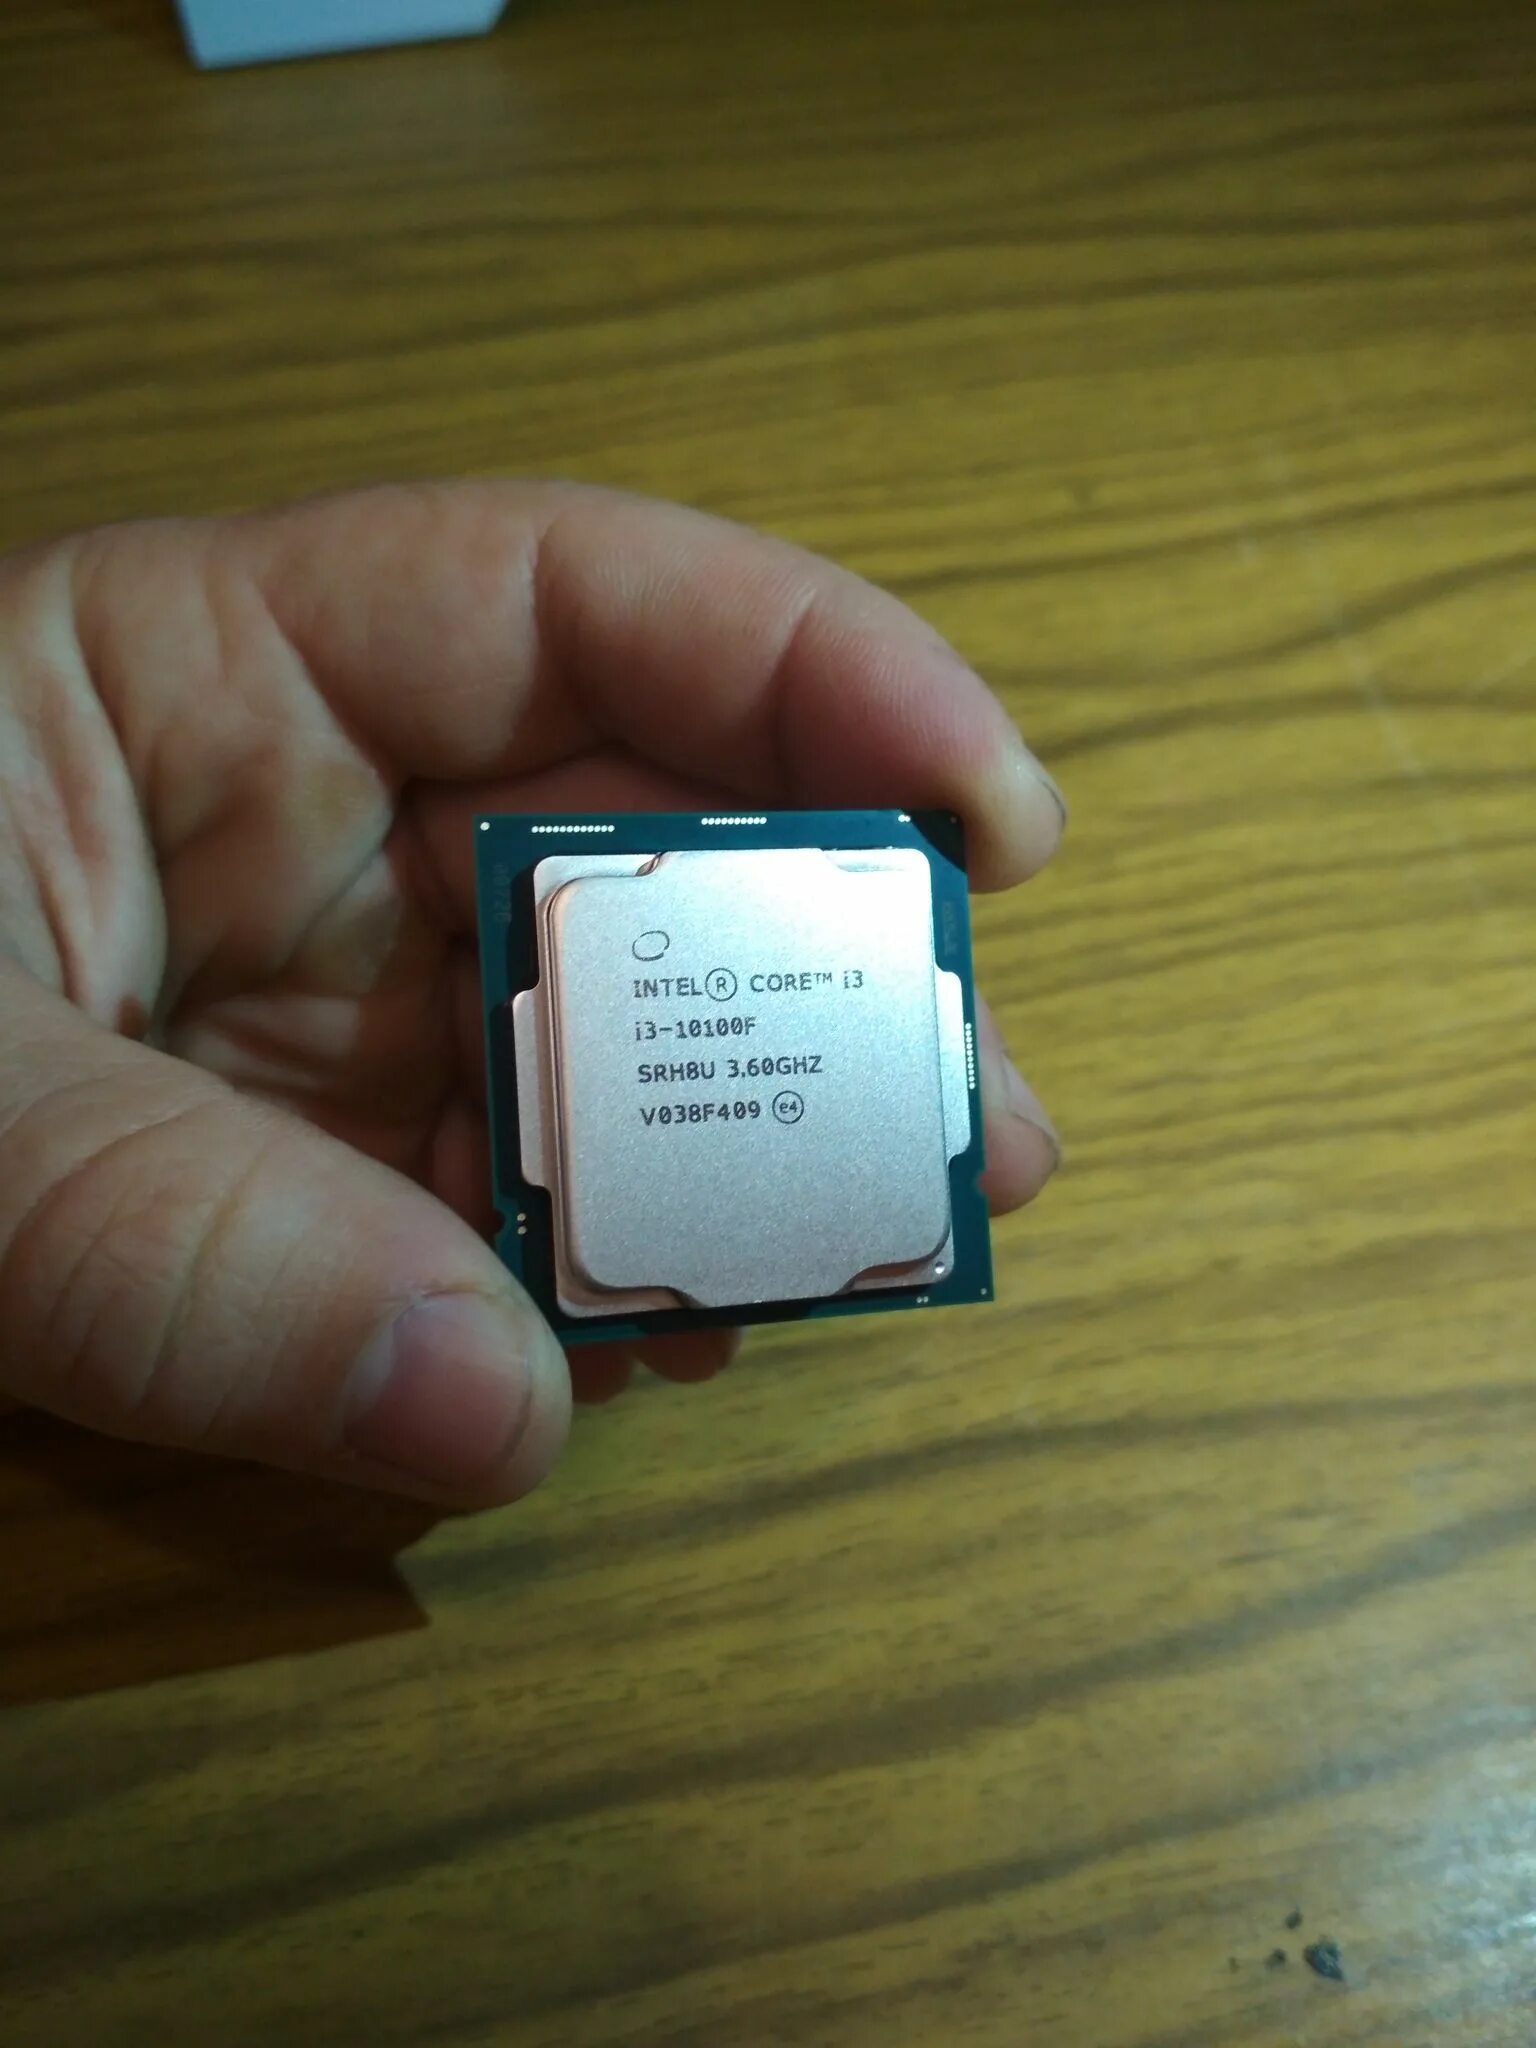 Интел 10100f. Процессор Intel Core i3-10100f OEM. Процессор Intel Core i3-10100f lga1200. Интел кор i3 10100 f. Intel Core i3-10100f (3.6 ГГЦ).